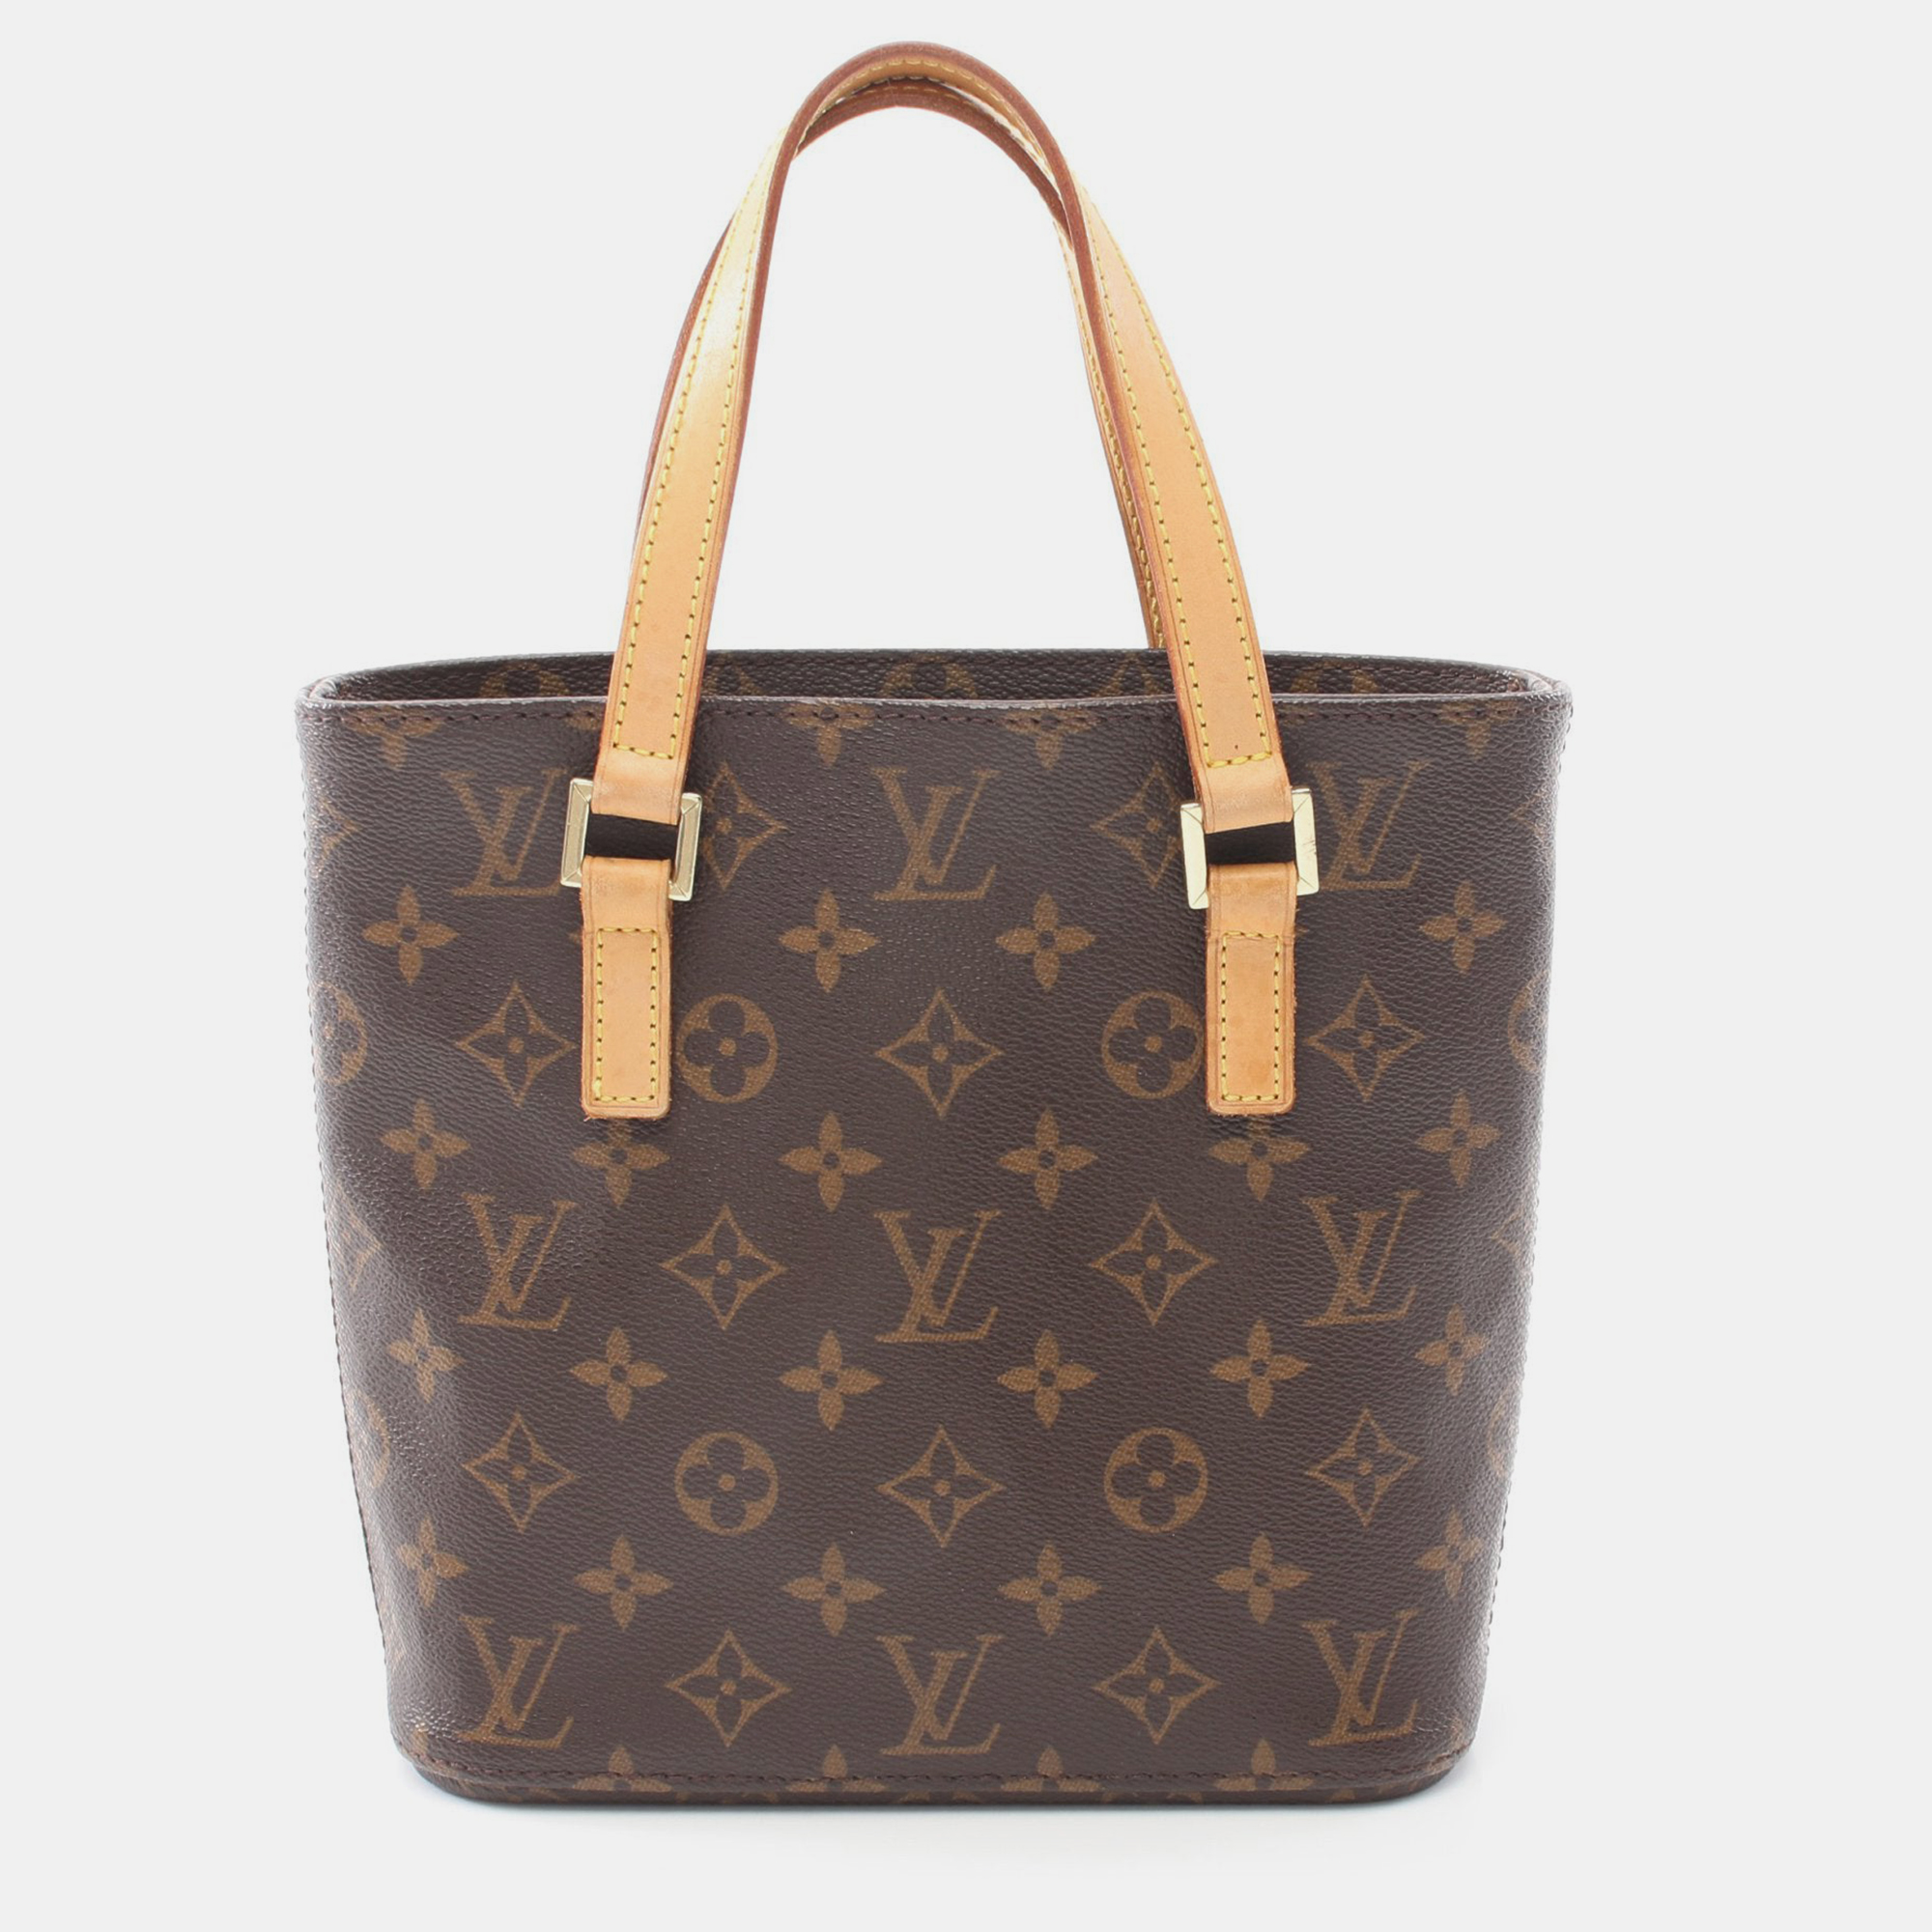 Louis vuitton vavin pm monogram handbag pvc leather brown